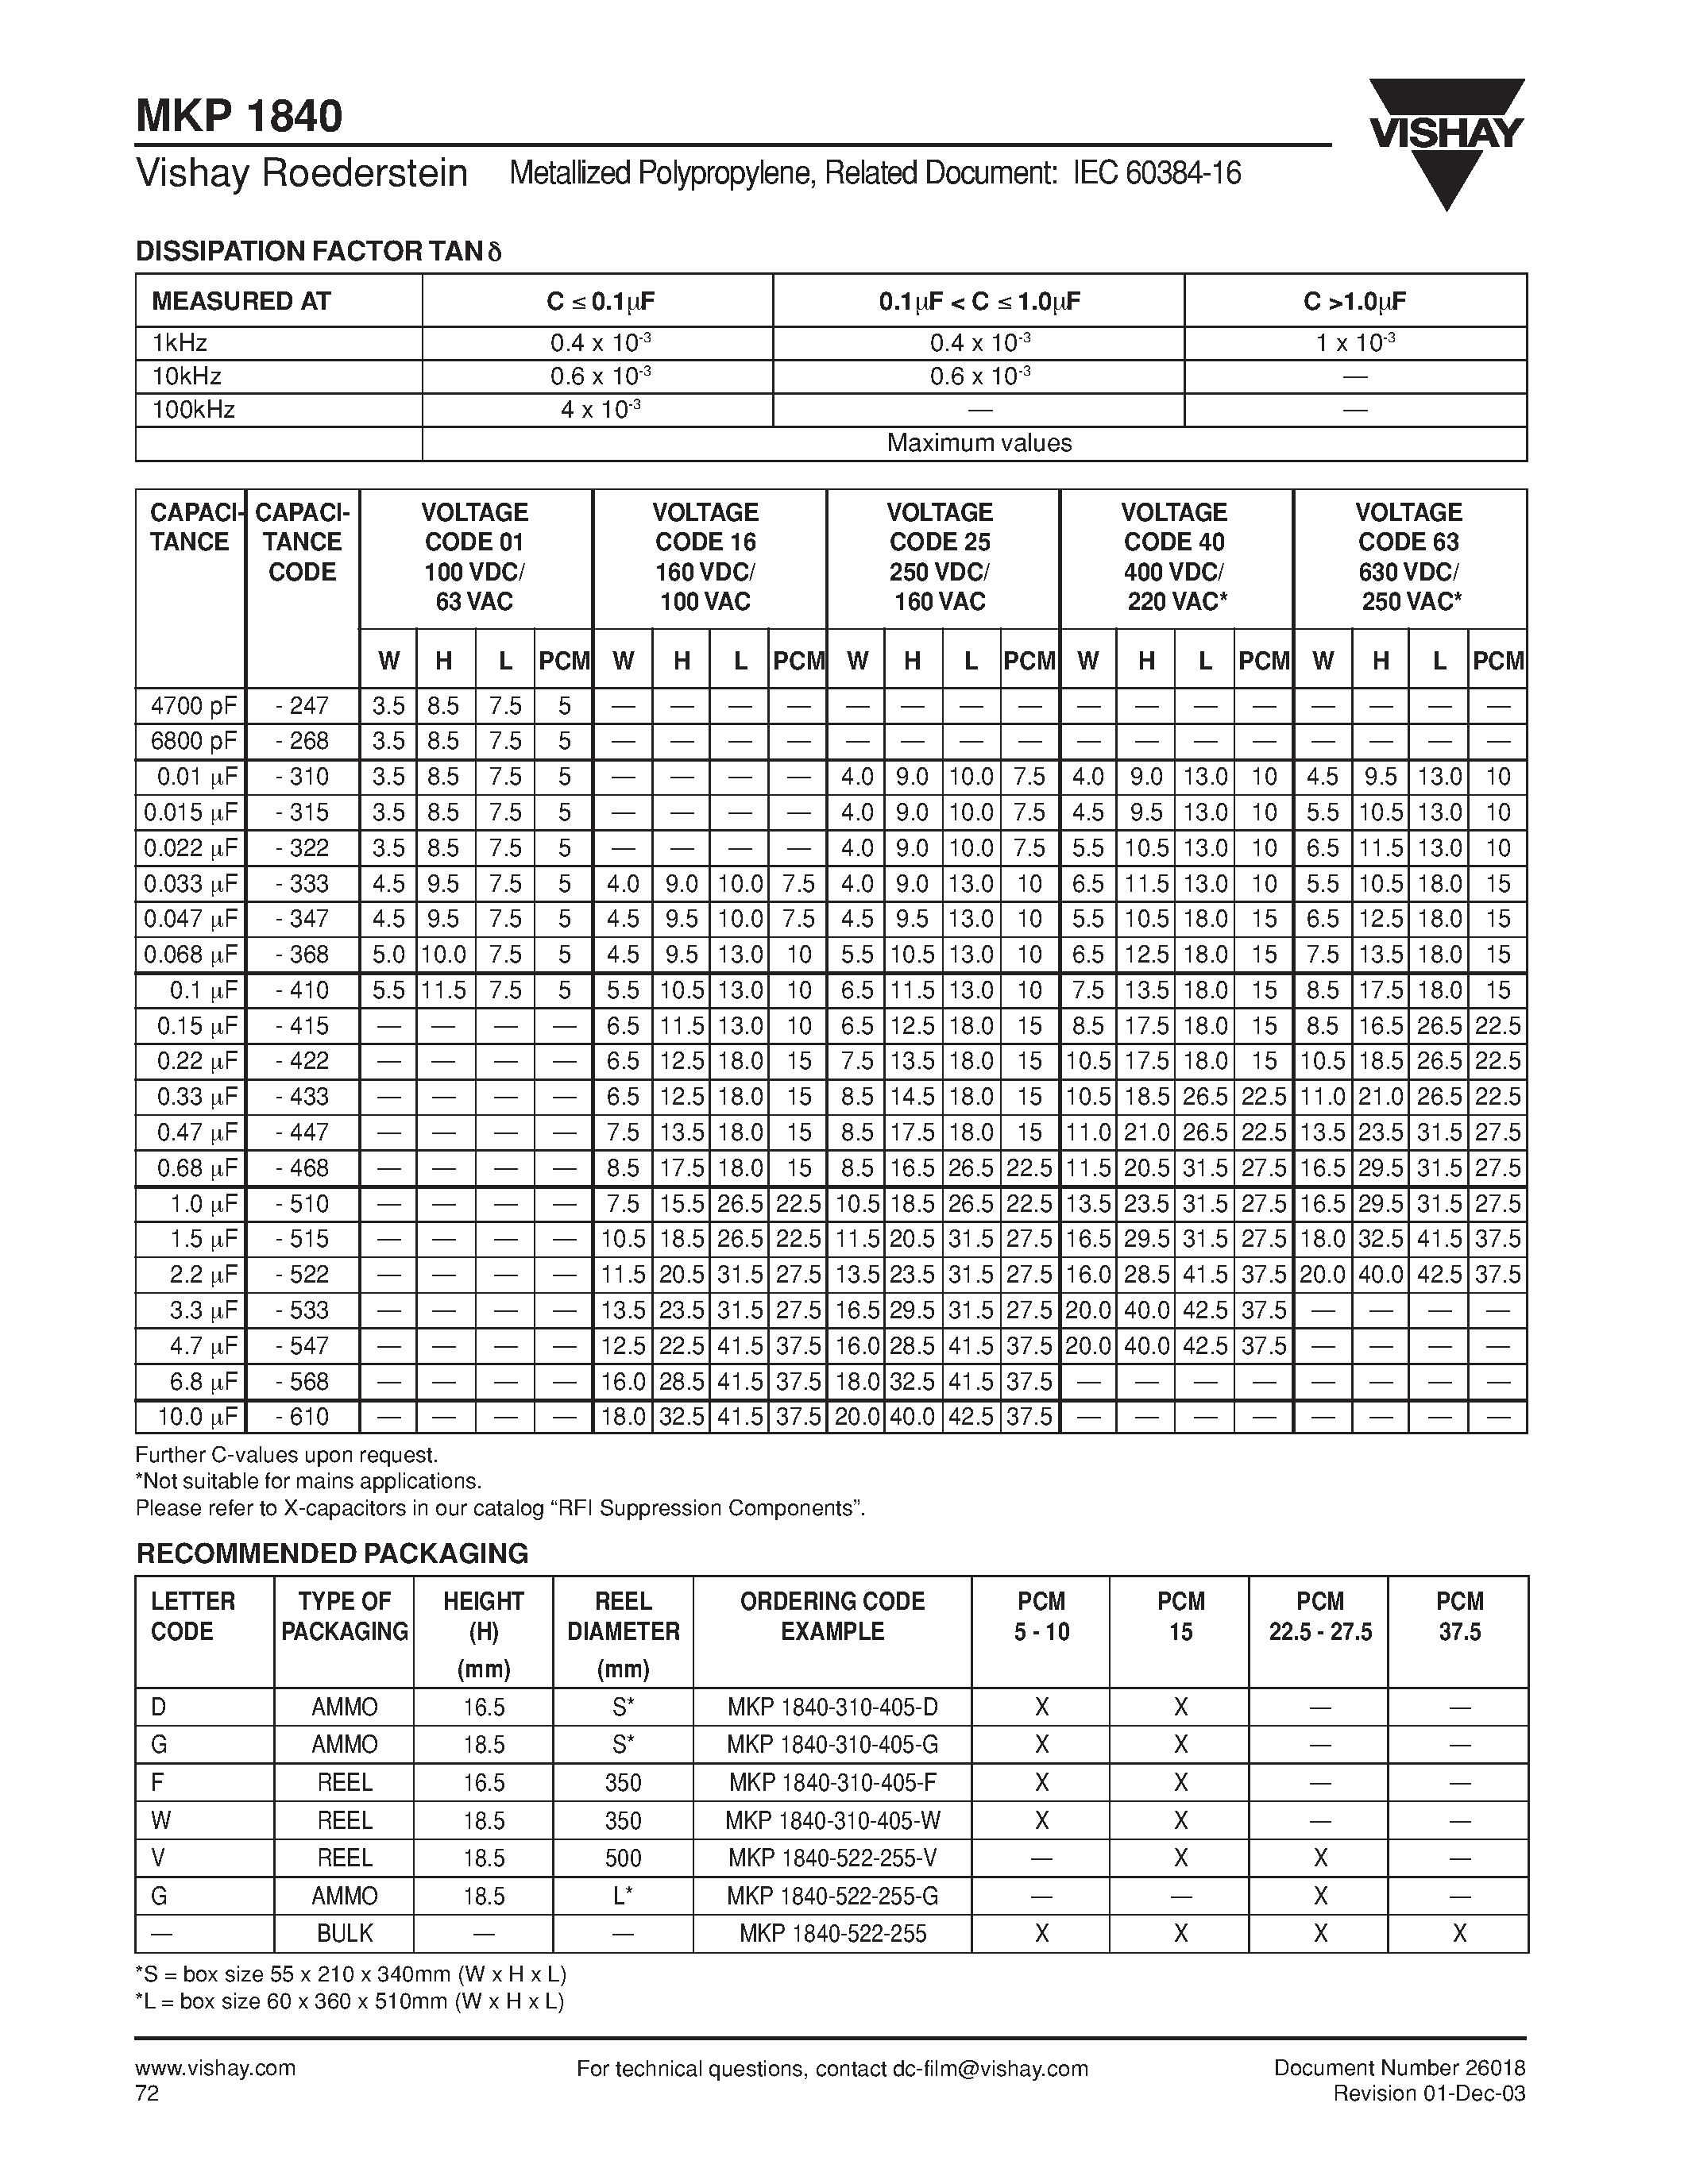 Даташит MKP1840-522-255-V - Metallized Polypropylene Film Capacitor Related Document: IEC 60384-16 страница 2